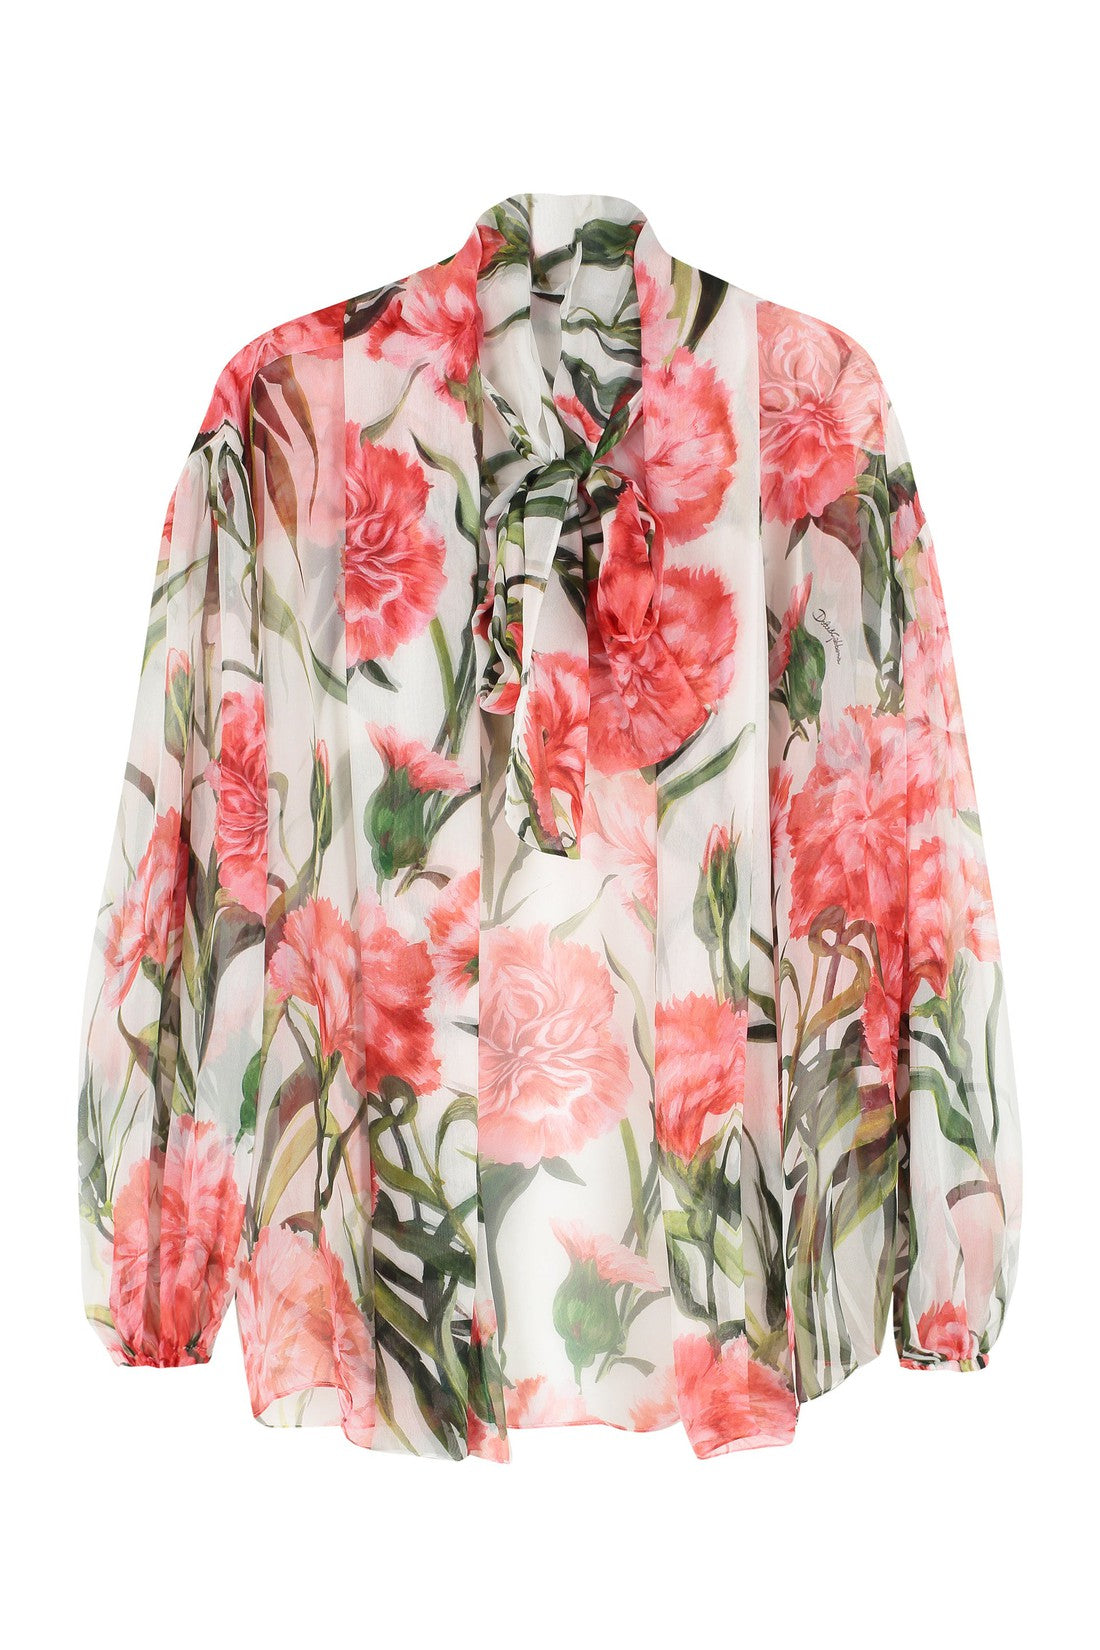 Dolce & Gabbana-OUTLET-SALE-Printed silk blouse-ARCHIVIST